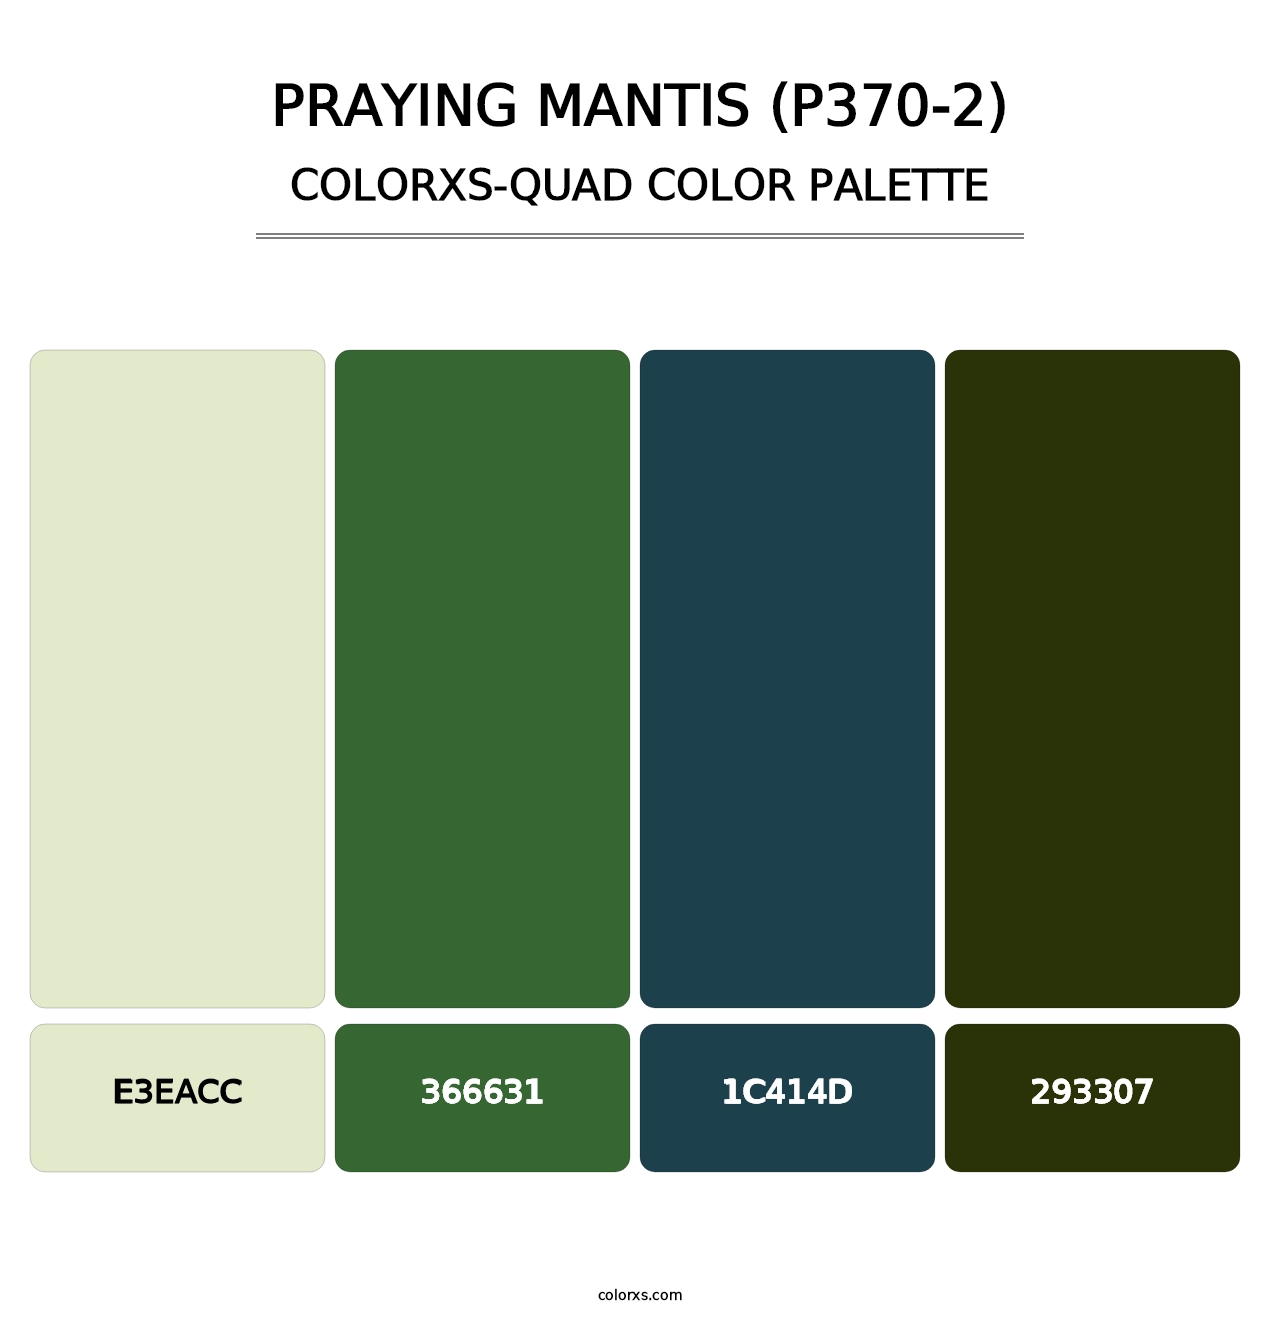 Praying Mantis (P370-2) - Colorxs Quad Palette